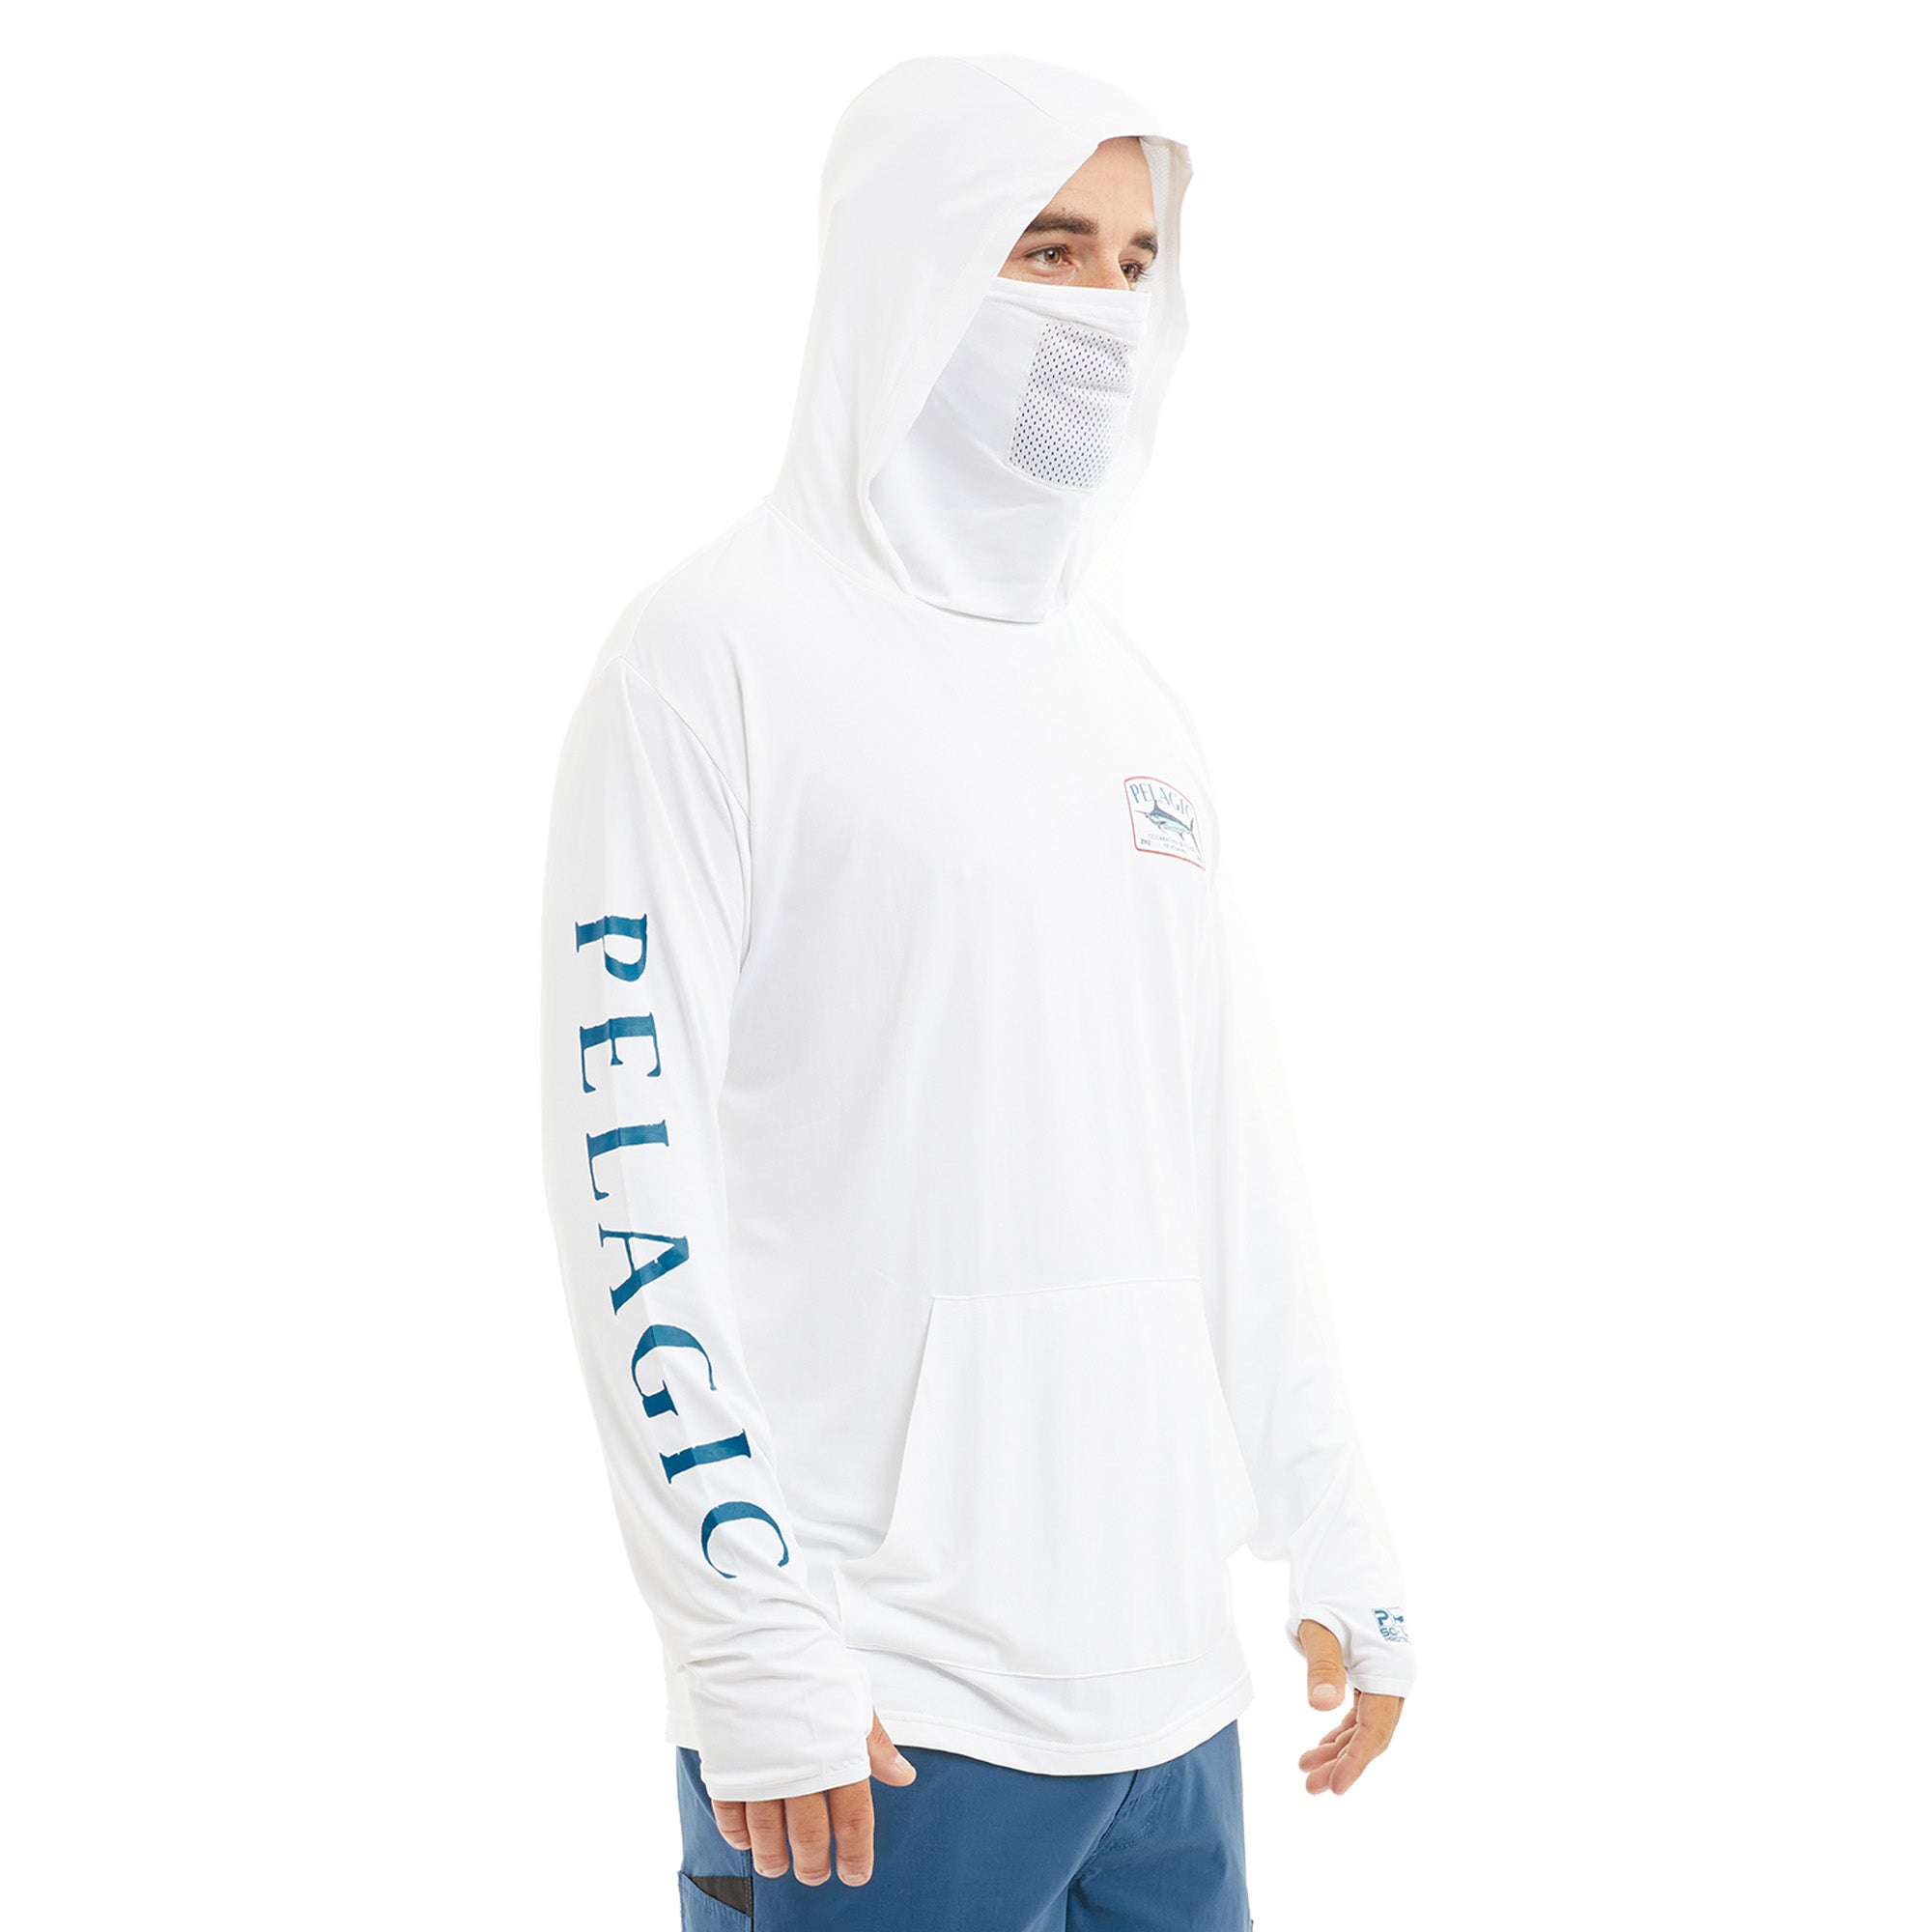 PELAGIC Ocean Fishing Shirt Upf 50 Long Sleeve Hooded Face Cover